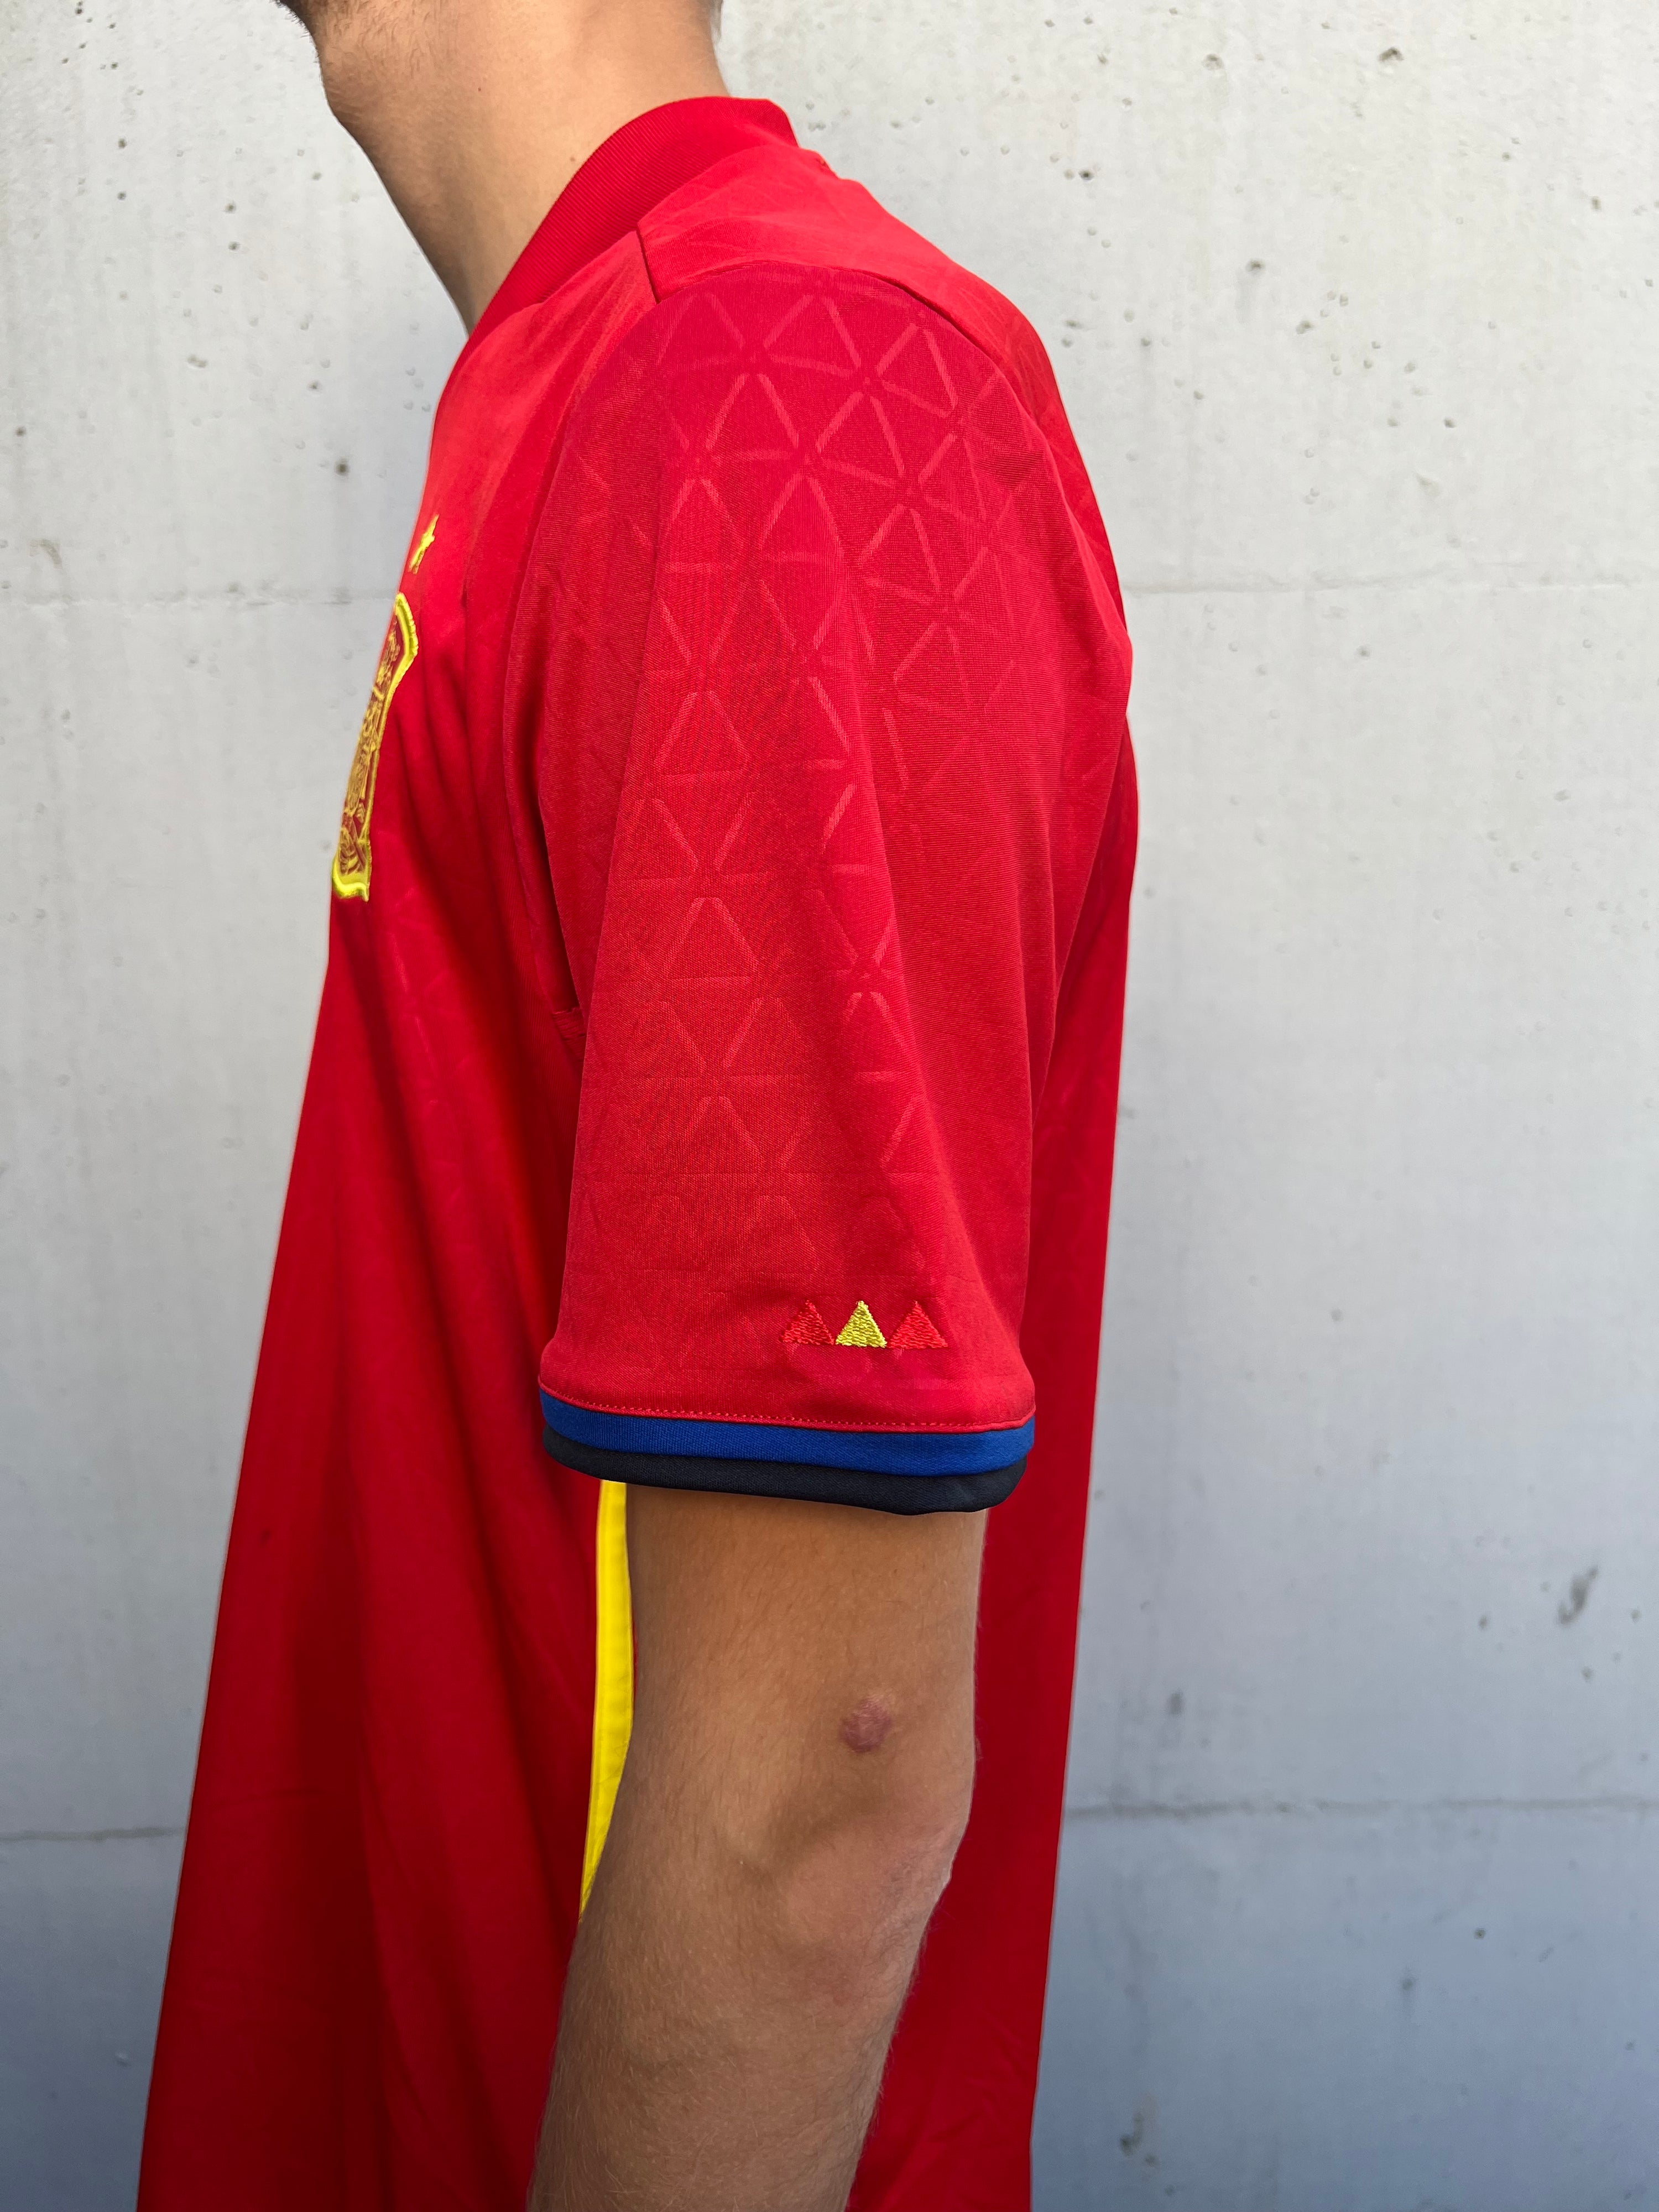 Adidas Spanien Spain National Team Football Fußball Trikot Jersey (L)